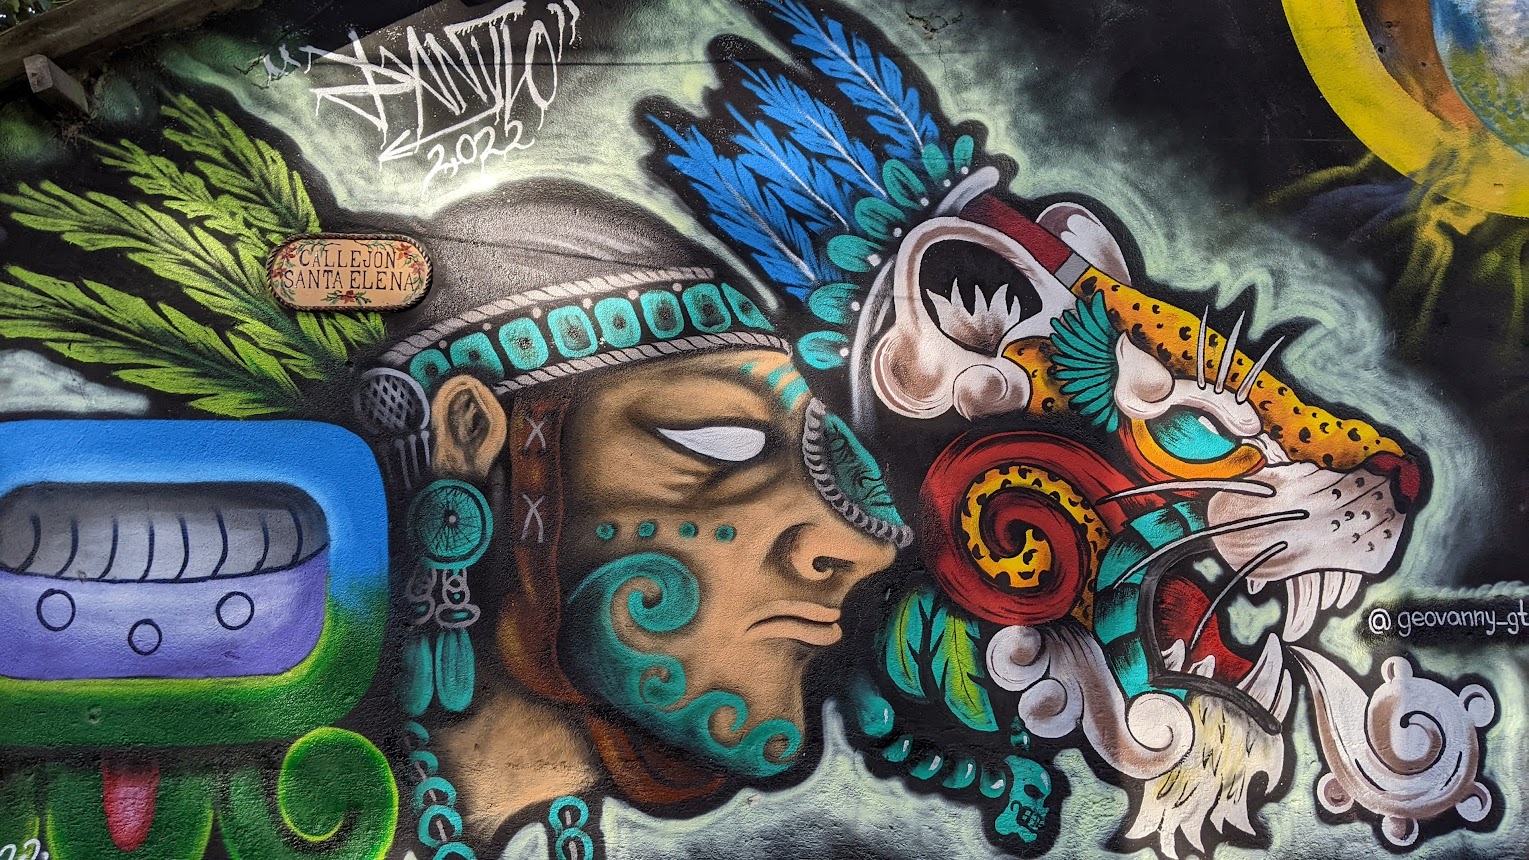 Art near Hotel Amigo in Panajachel Guatemala